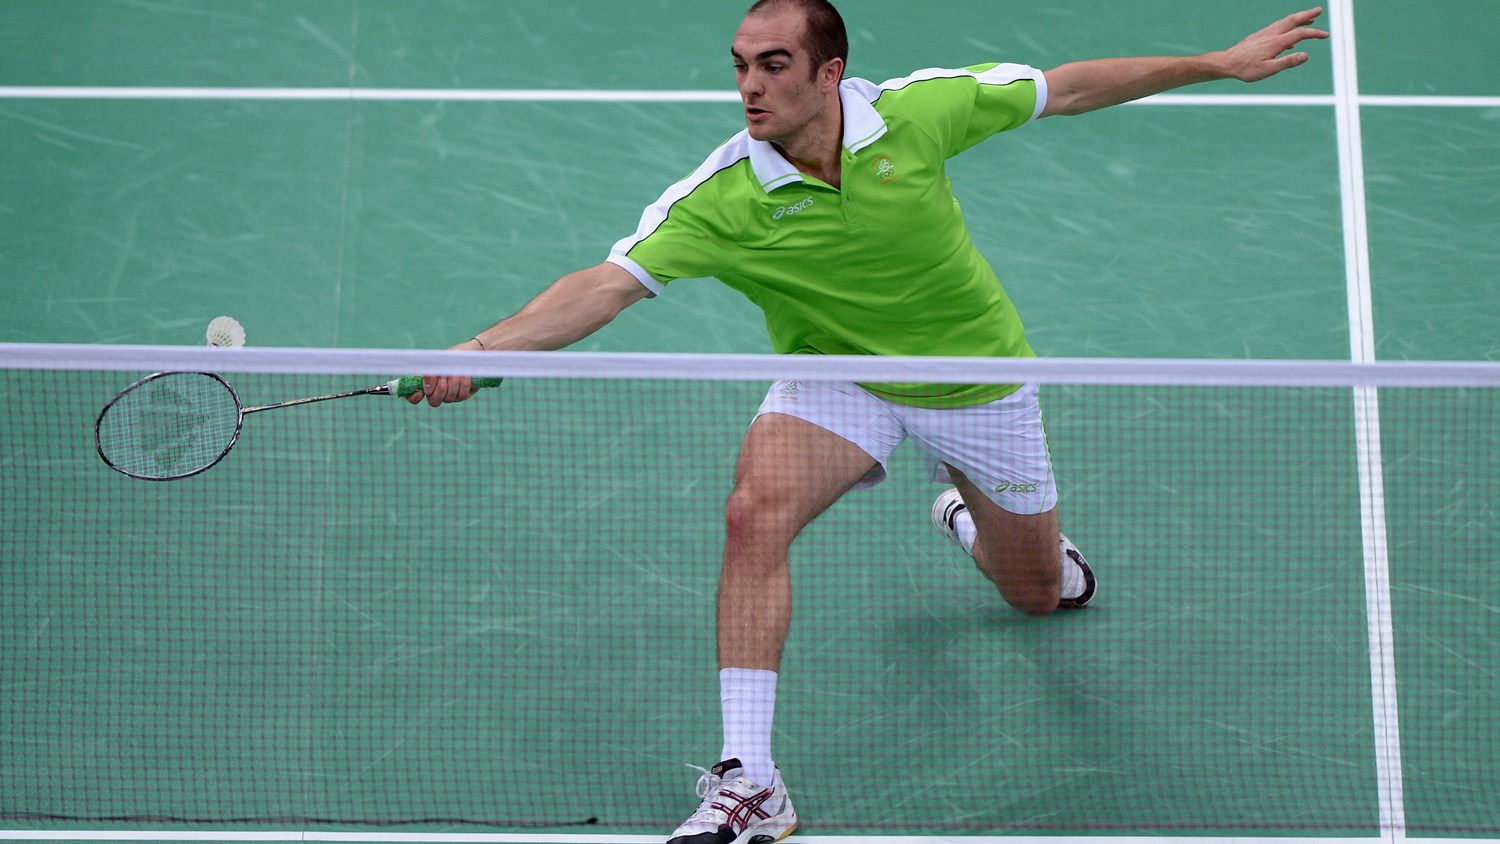 Scott Evans tipped for Badminton gold at Baku 2015